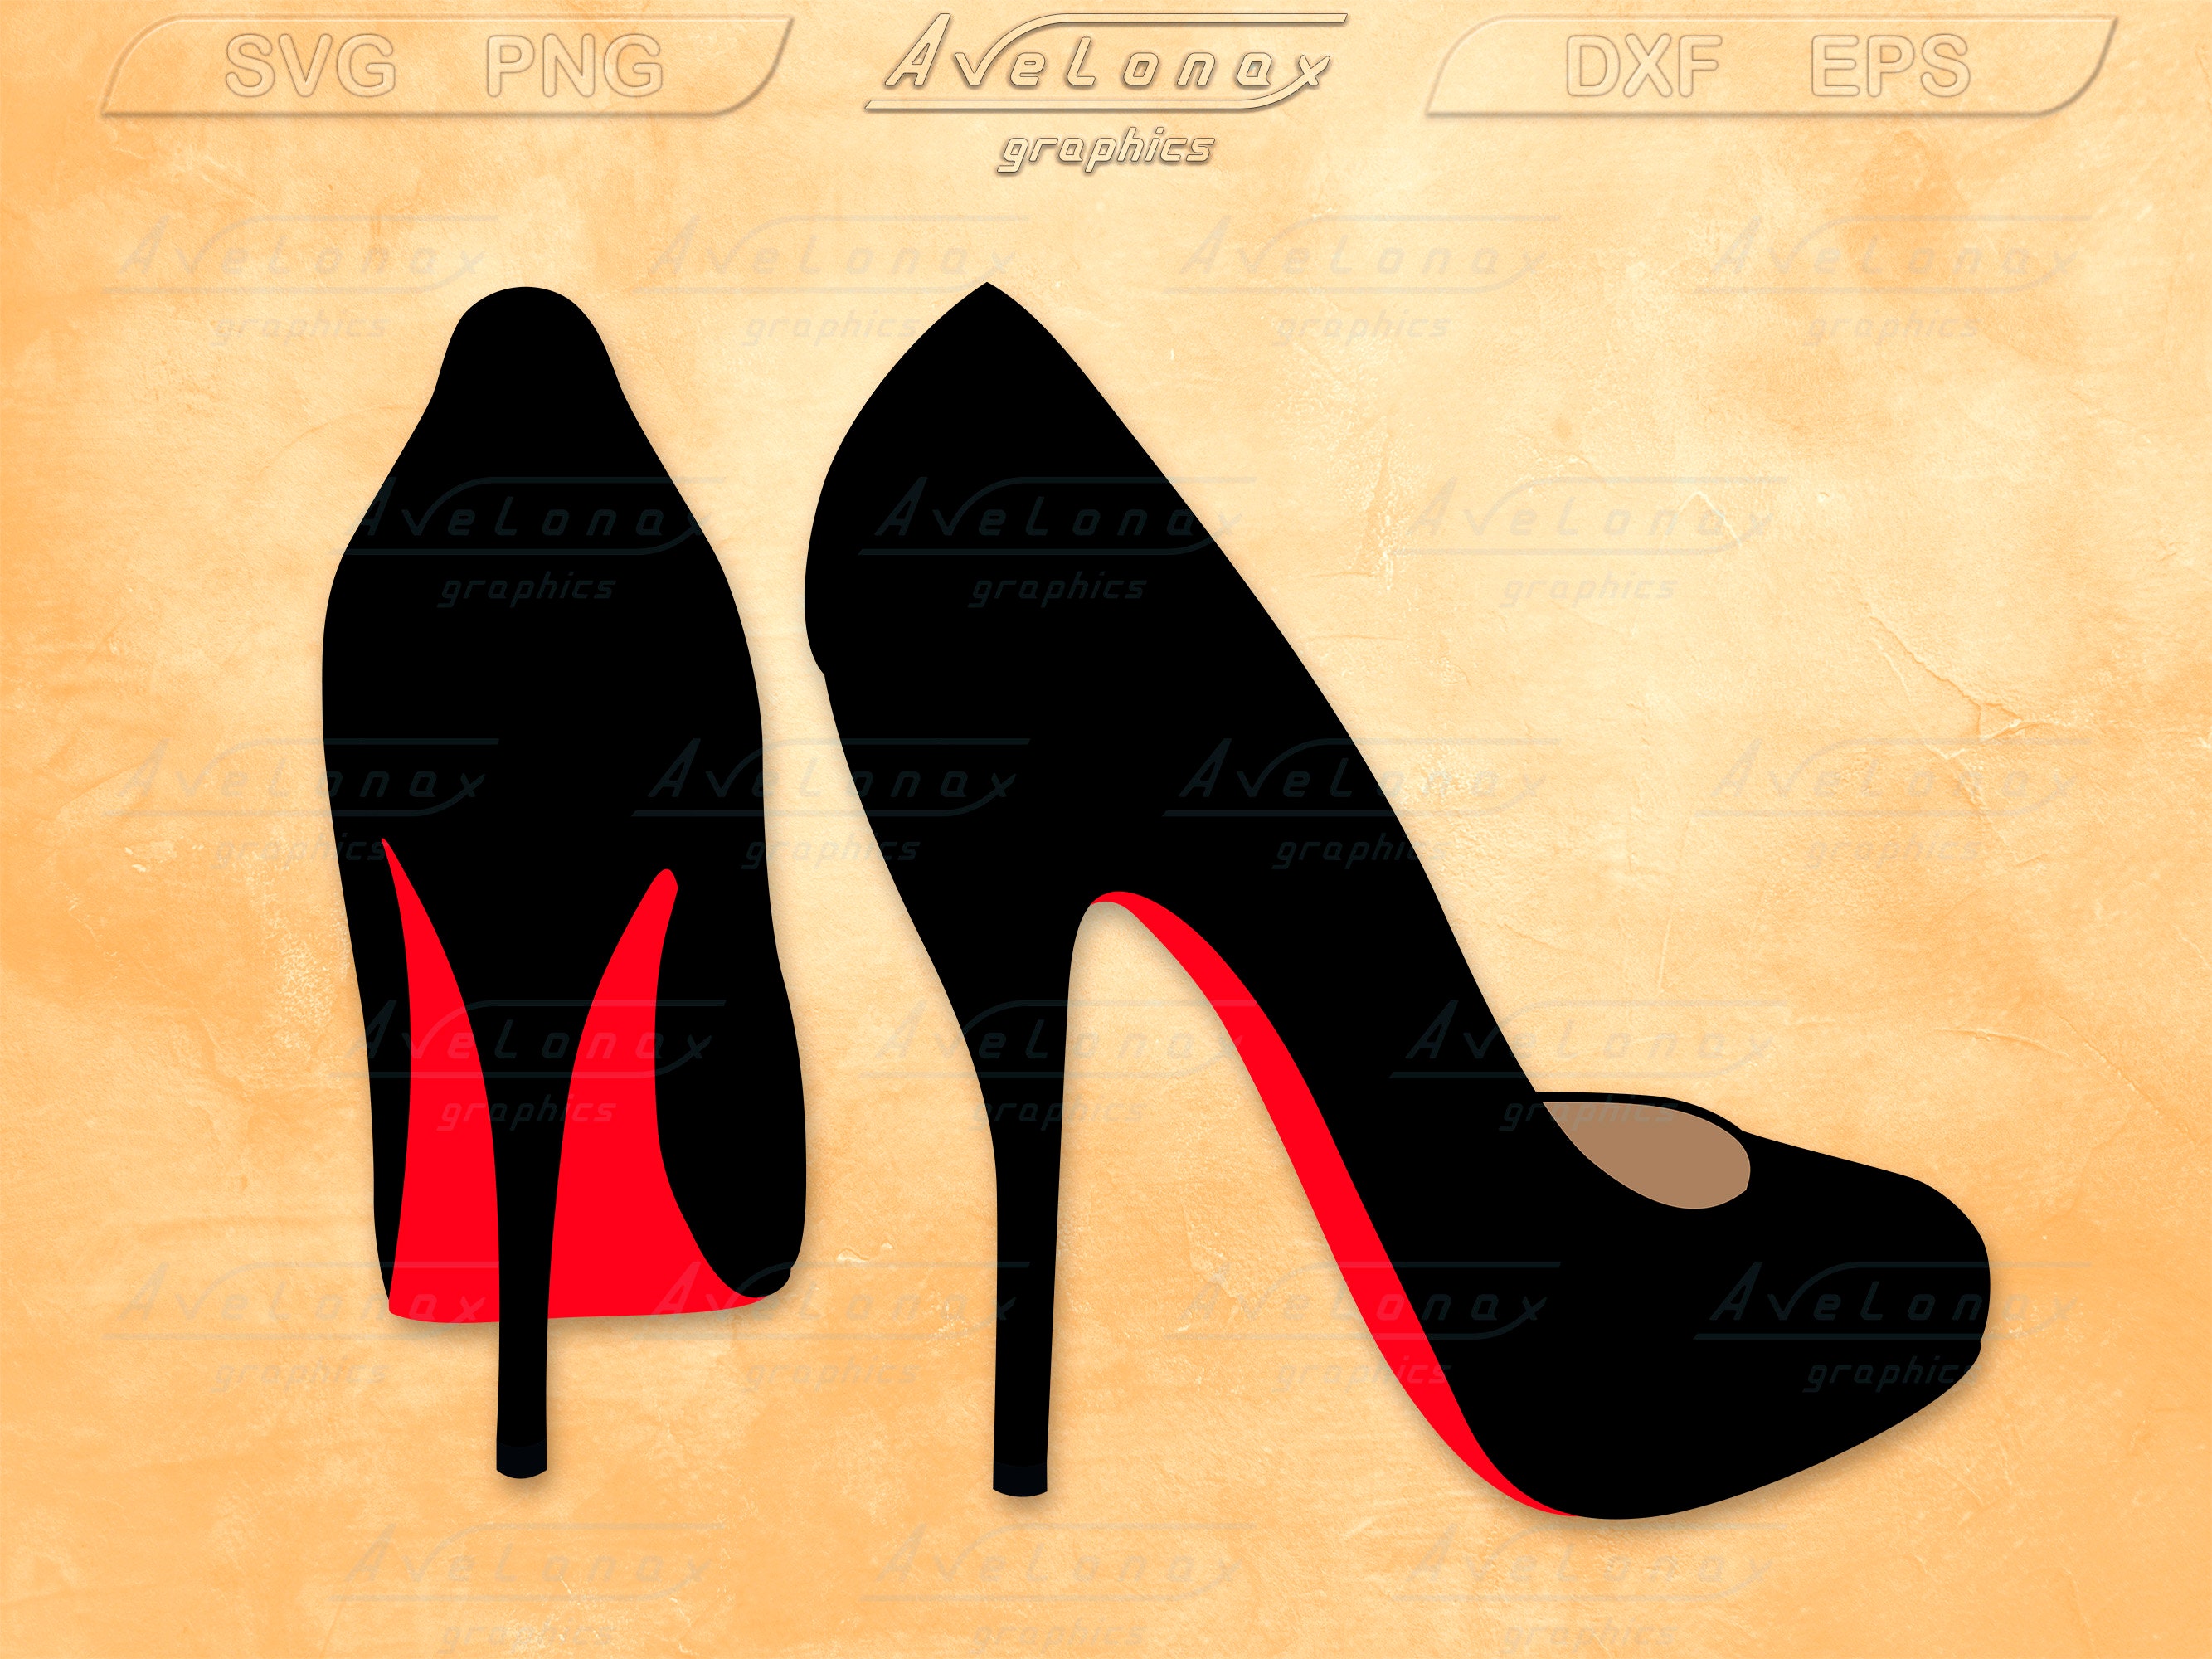 Red bottom stiletto heels svg, High heel shoe svg, Louboutin heels svg